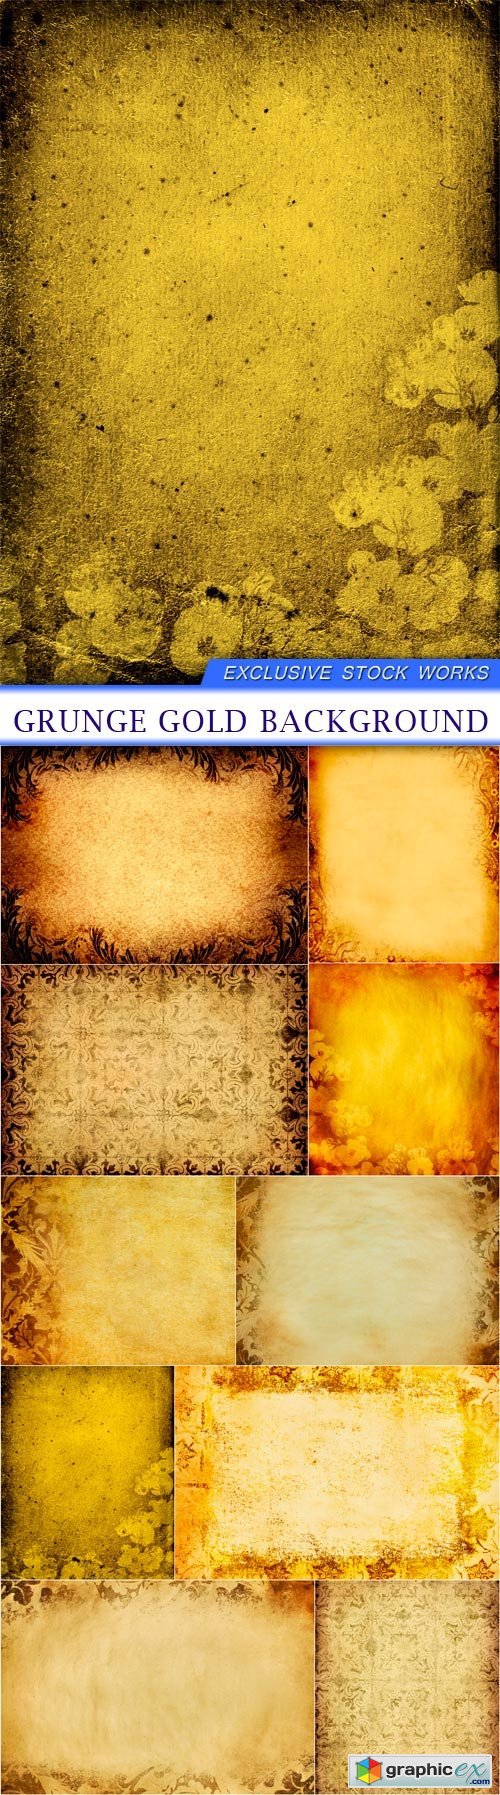 Grunge gold background 10X JPEG